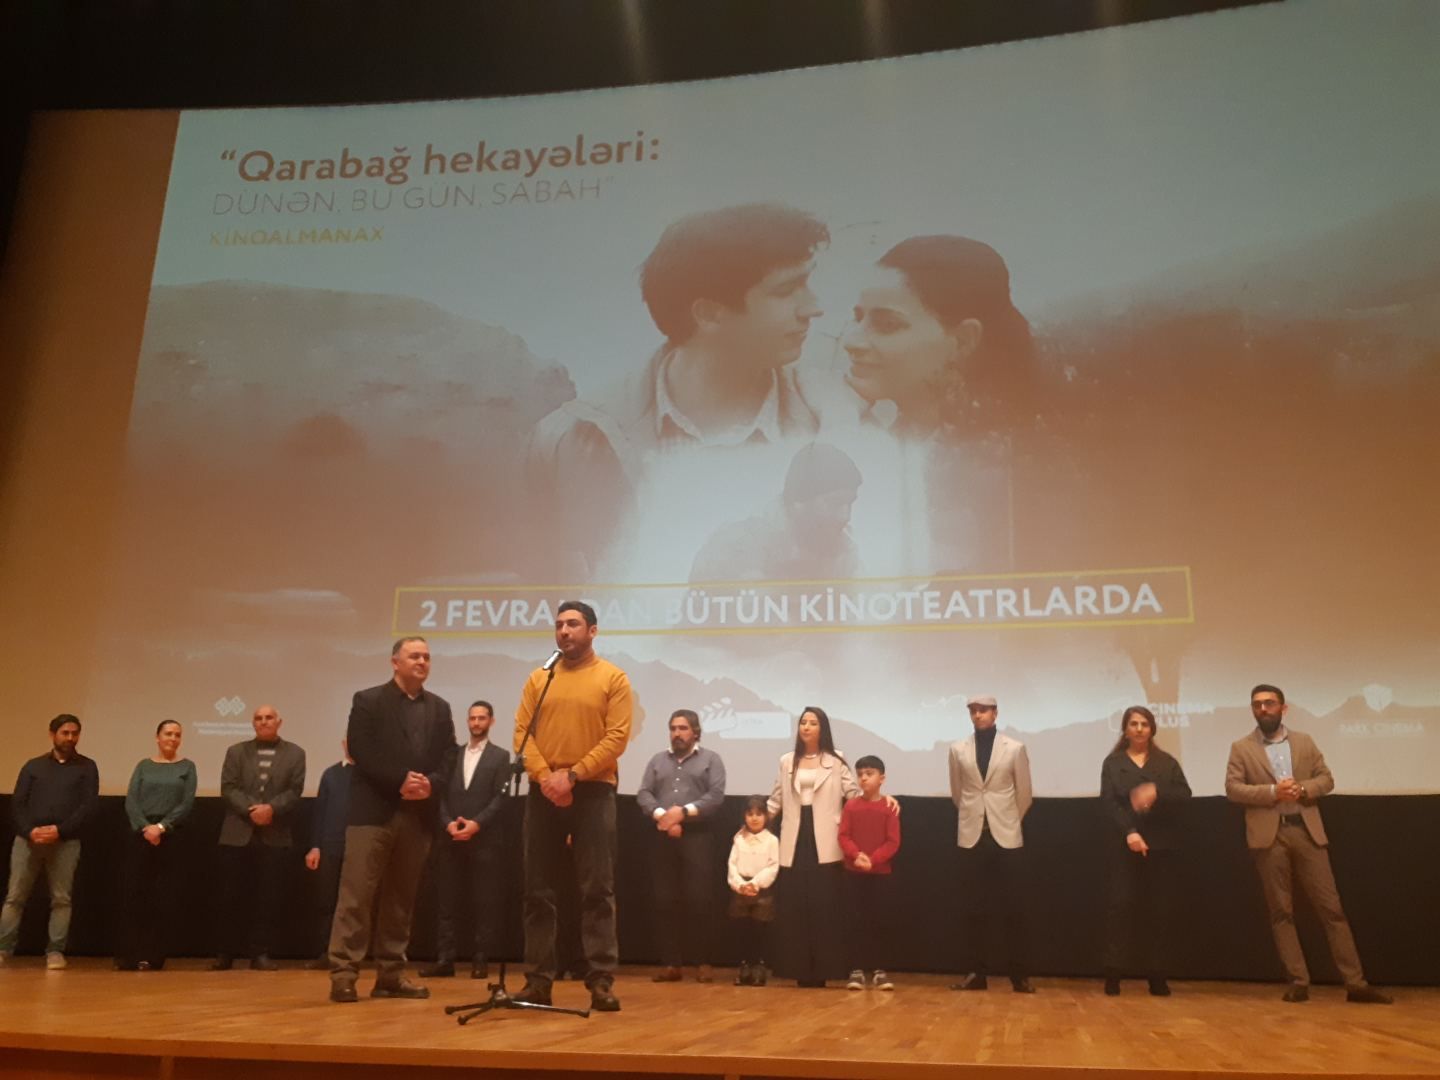 Film almanac about Karabakh premiered at Nizami Cinema [PHOTO]